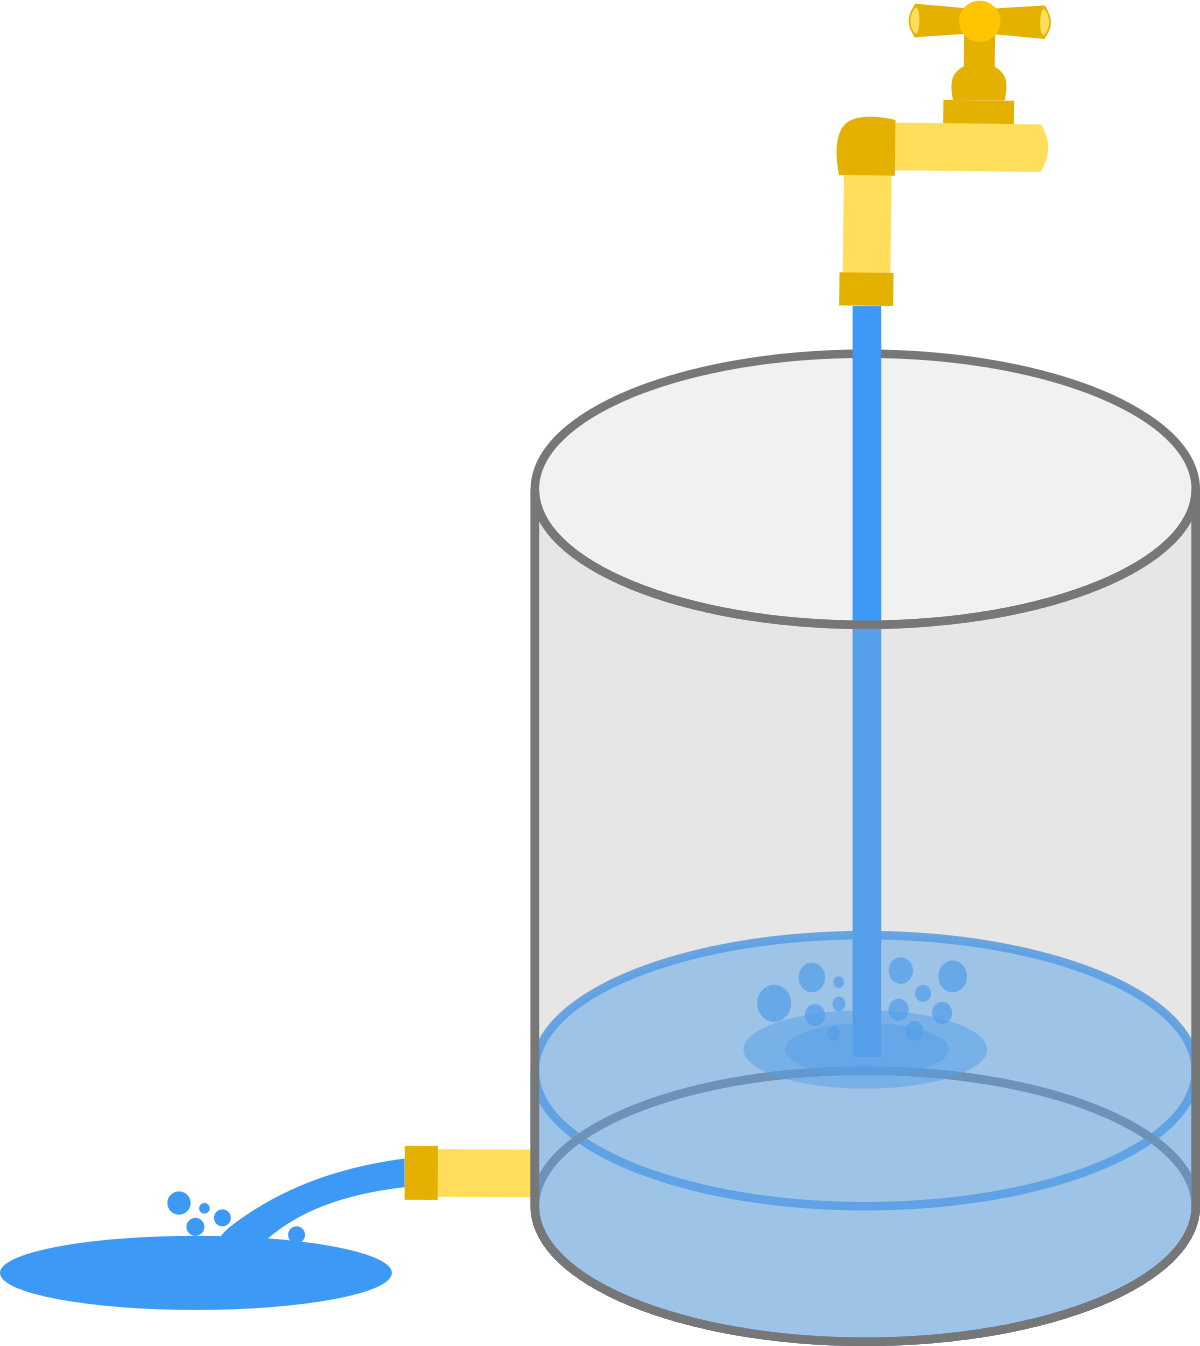  intermediate practice problems. Water clipart water flow